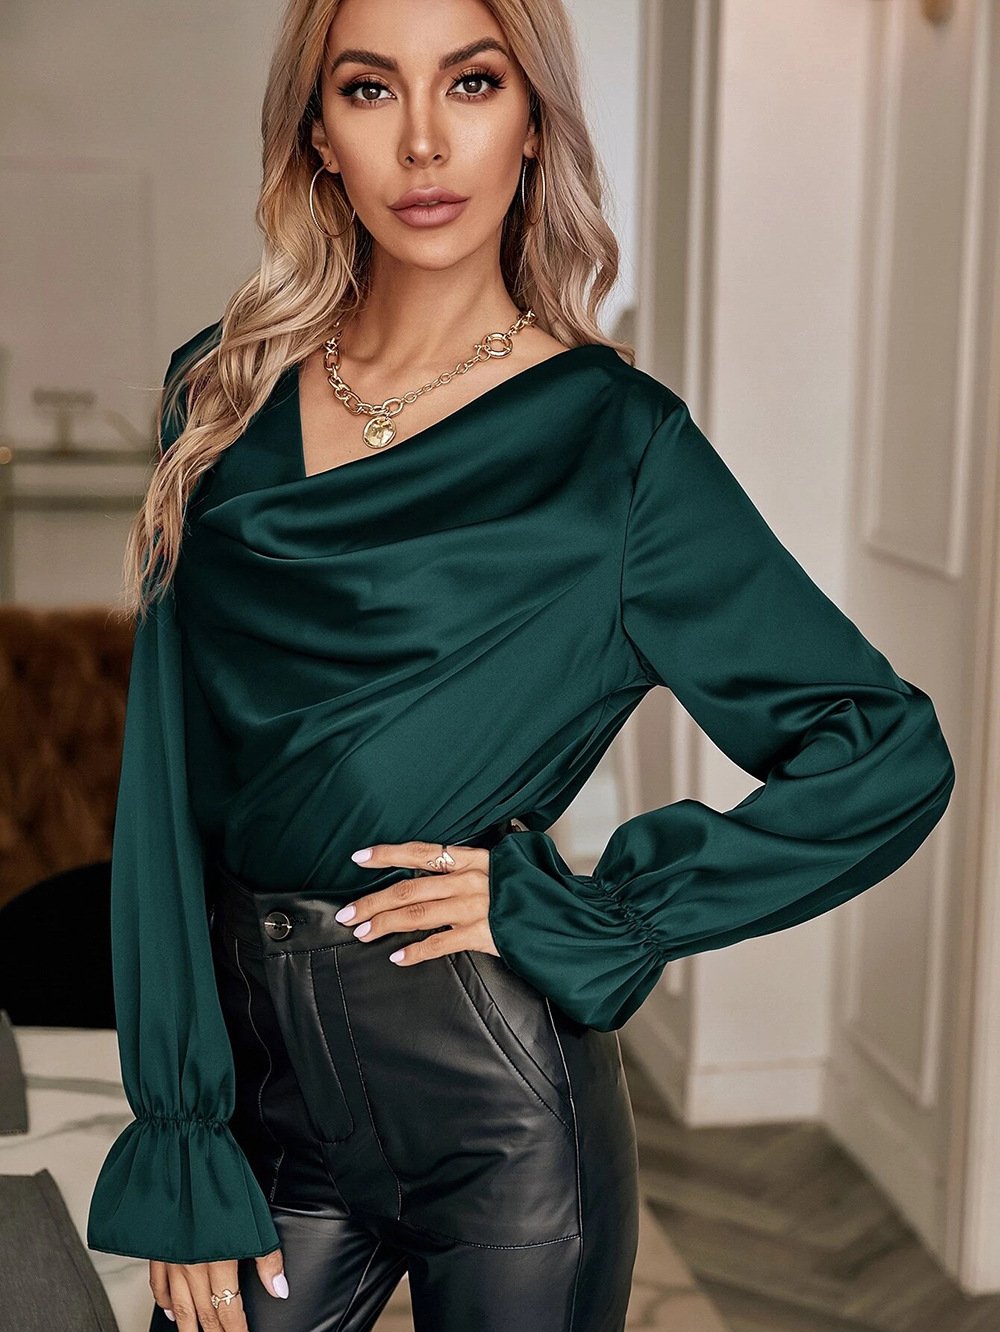 Elegant Satin Pullover Long Sleeves Women Shirts-Shirts & Tops-Green-S-Free Shipping at meselling99